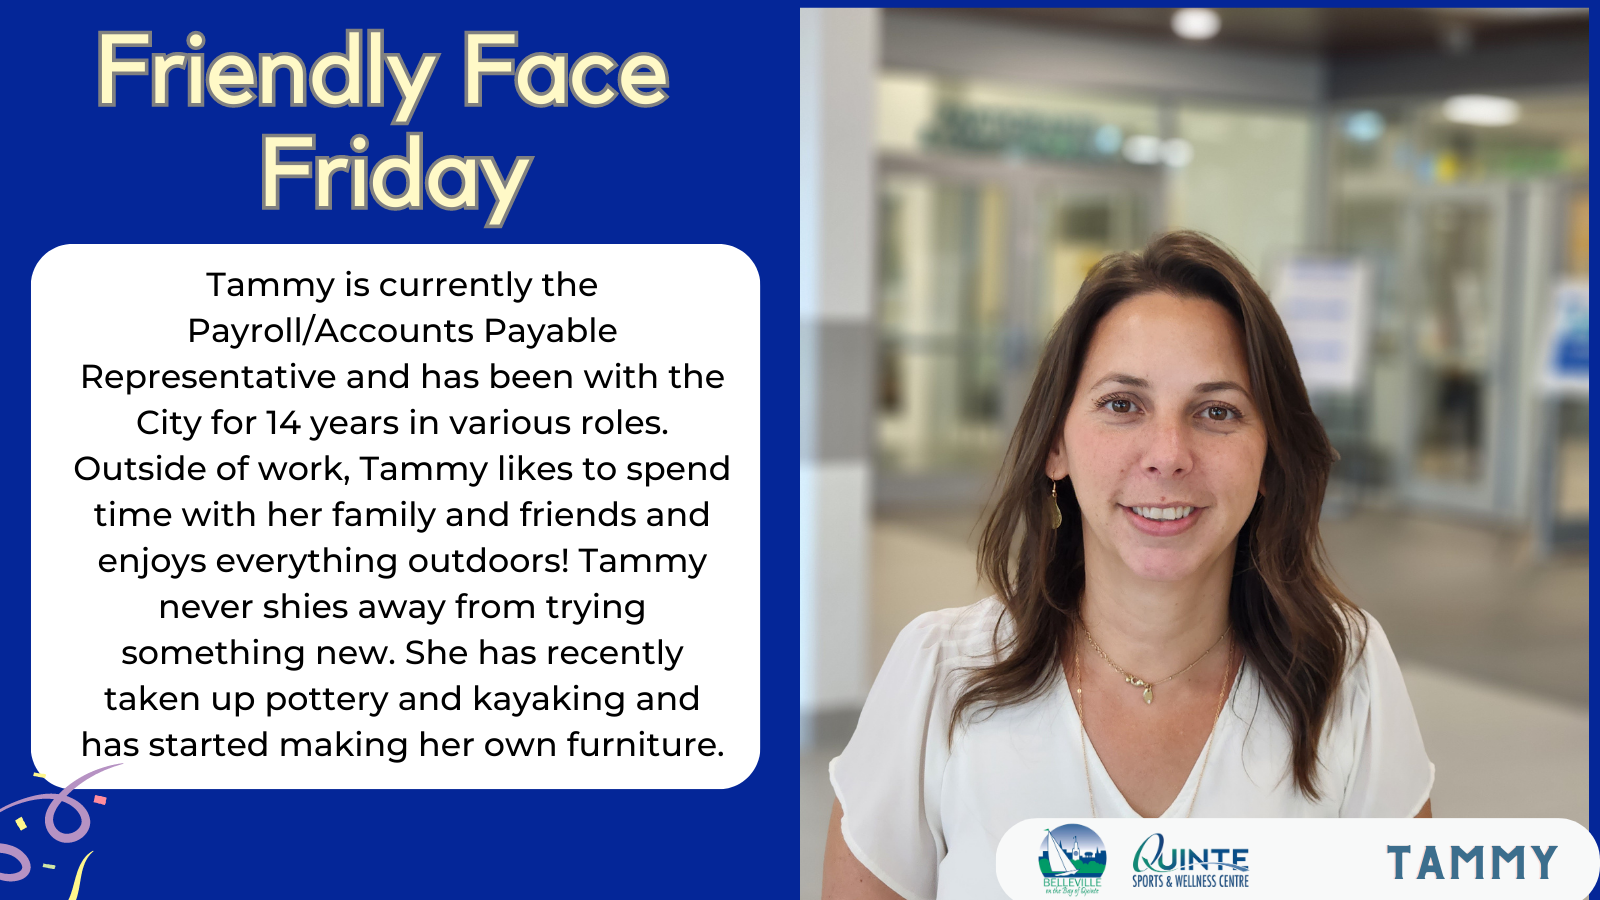 Tammy Friendly Face Friday